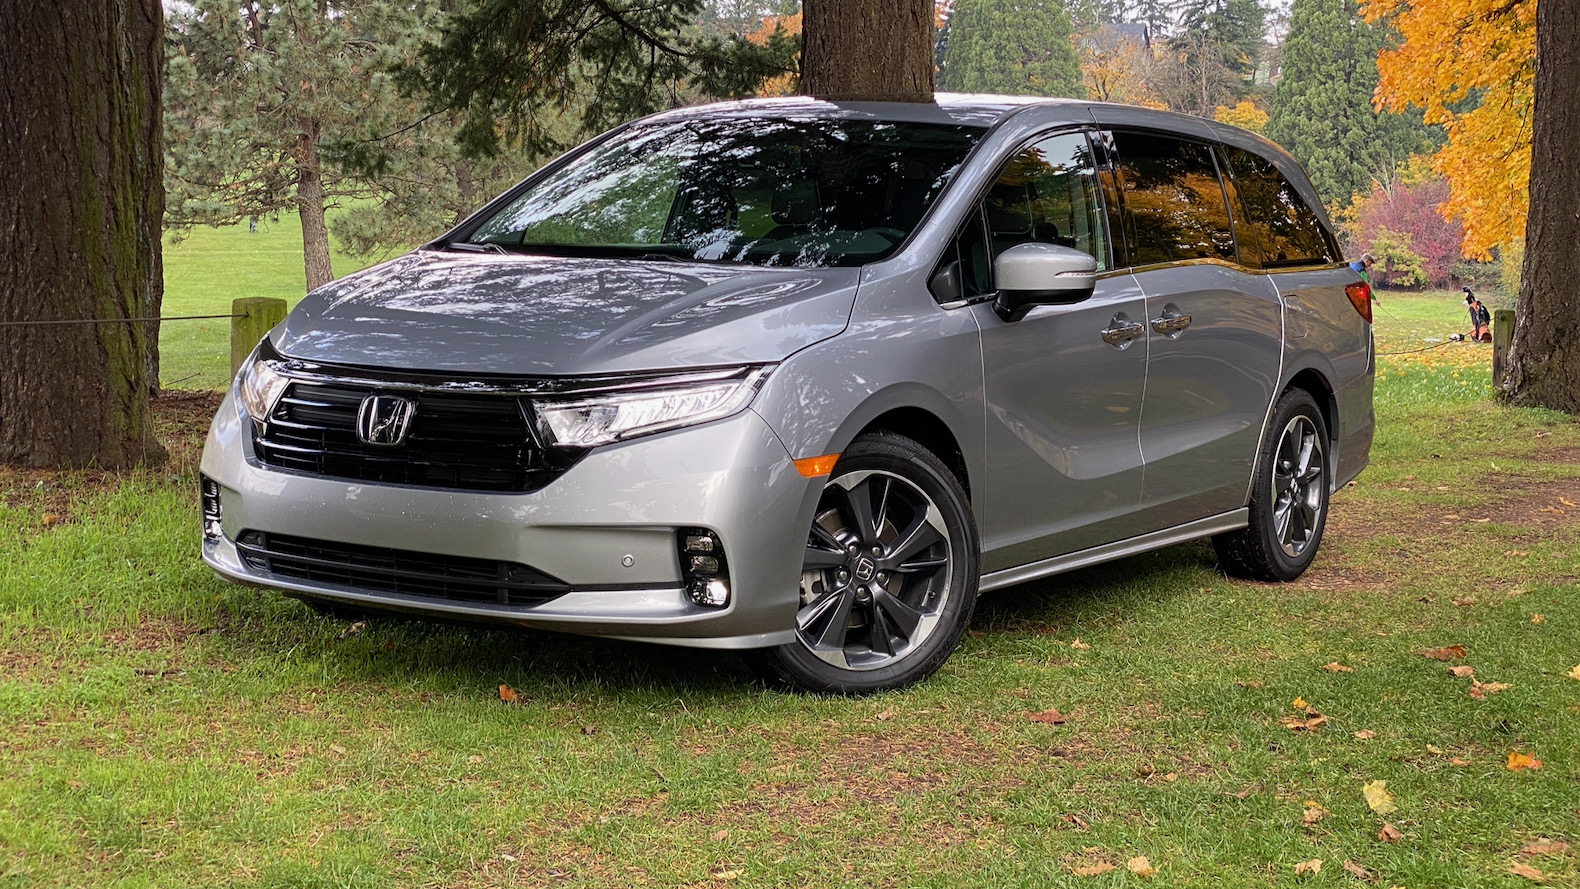 2021 Honda Odyssey Review: Our favorite family hauler - The Torque Report